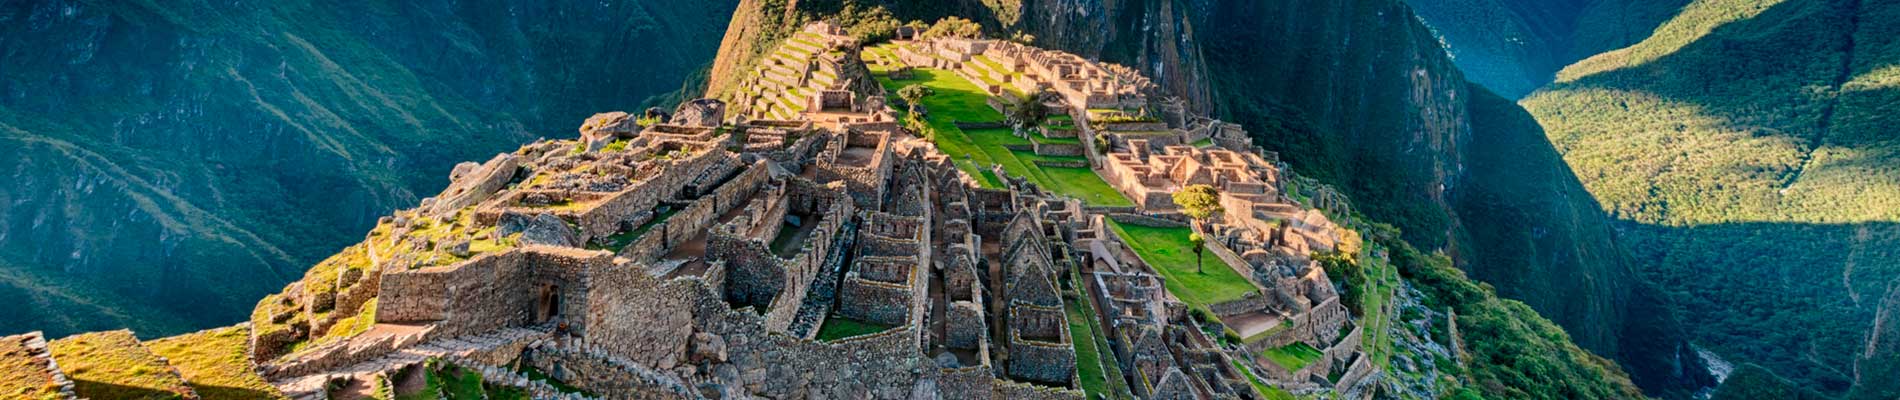 Machu Picchu 01 Day With Train From Cusco